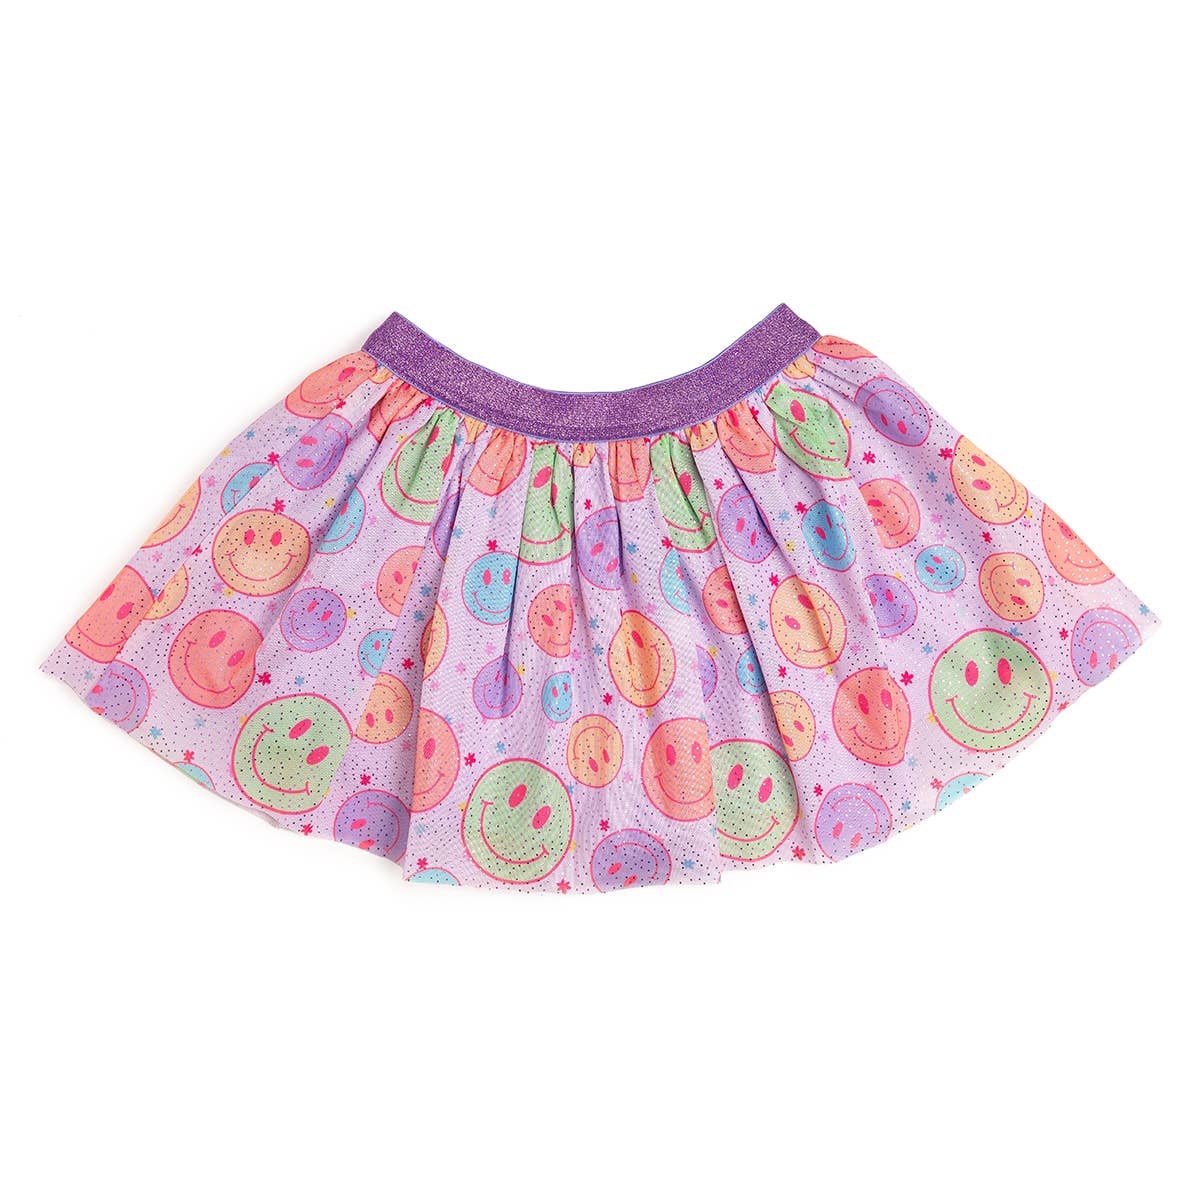 Smiley Face Tutu - Spring Skirt - Kids Tutu